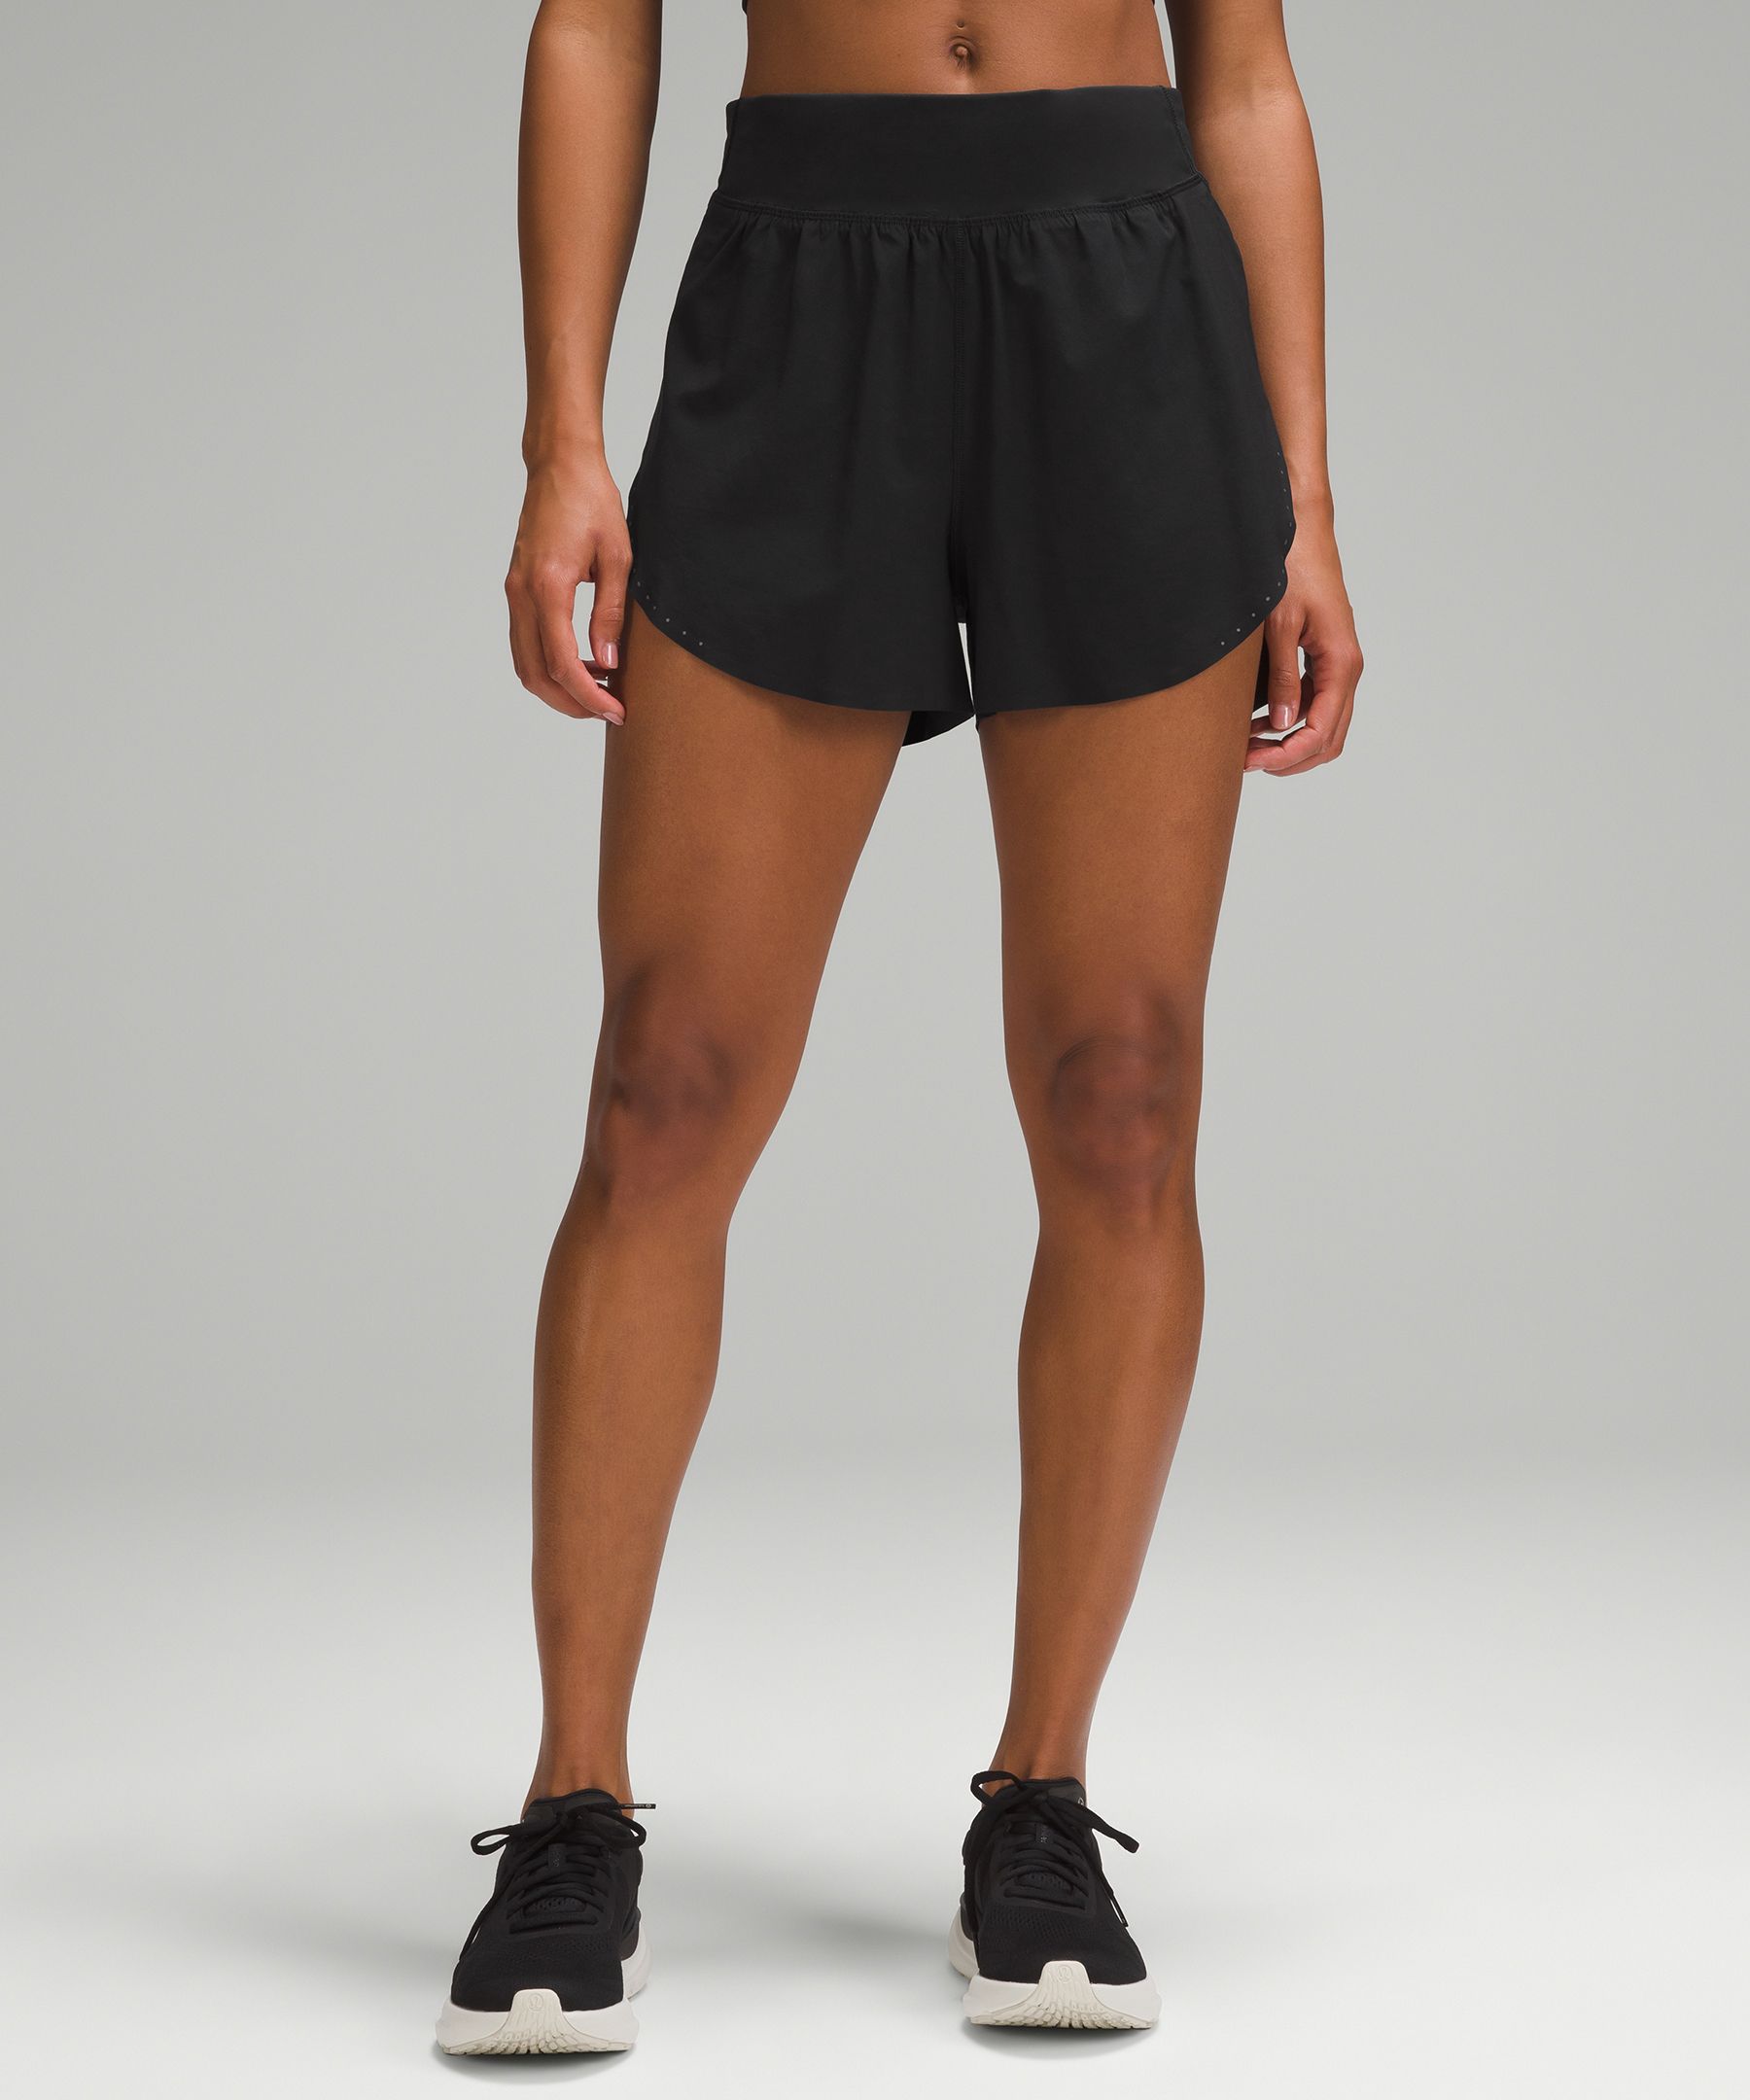 Lululemon Camo Lulu Running Shorts Size 2 - $27 (53% Off Retail) - From  Kenzie